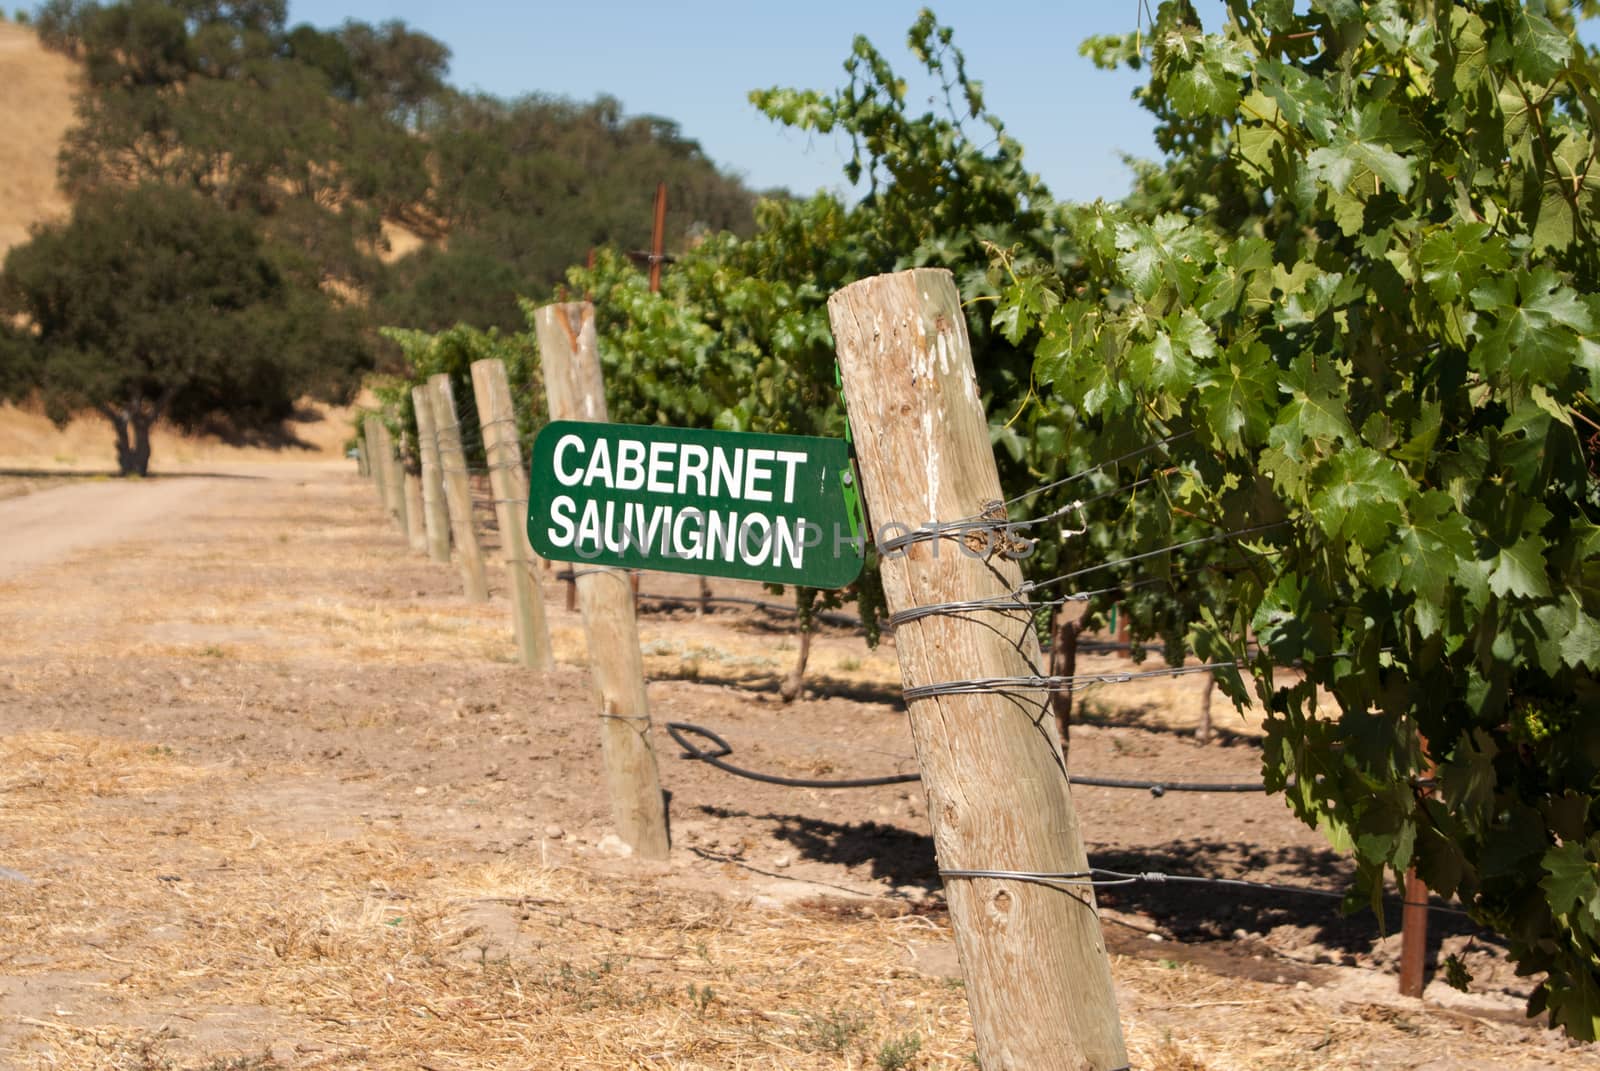 Cabernet Sauvignon grapes growing in California by emattil